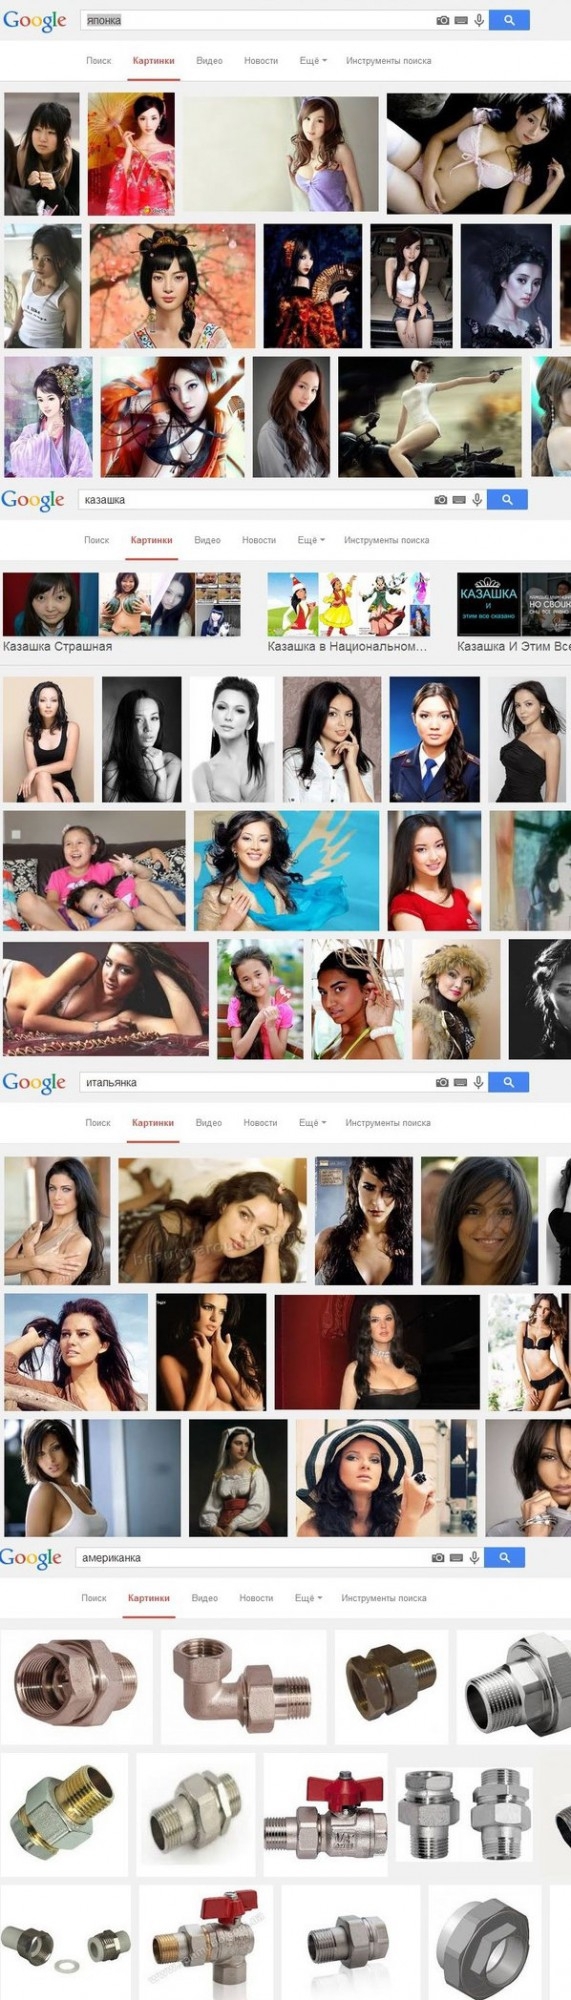 Поиск по гугл картинкам и девушки